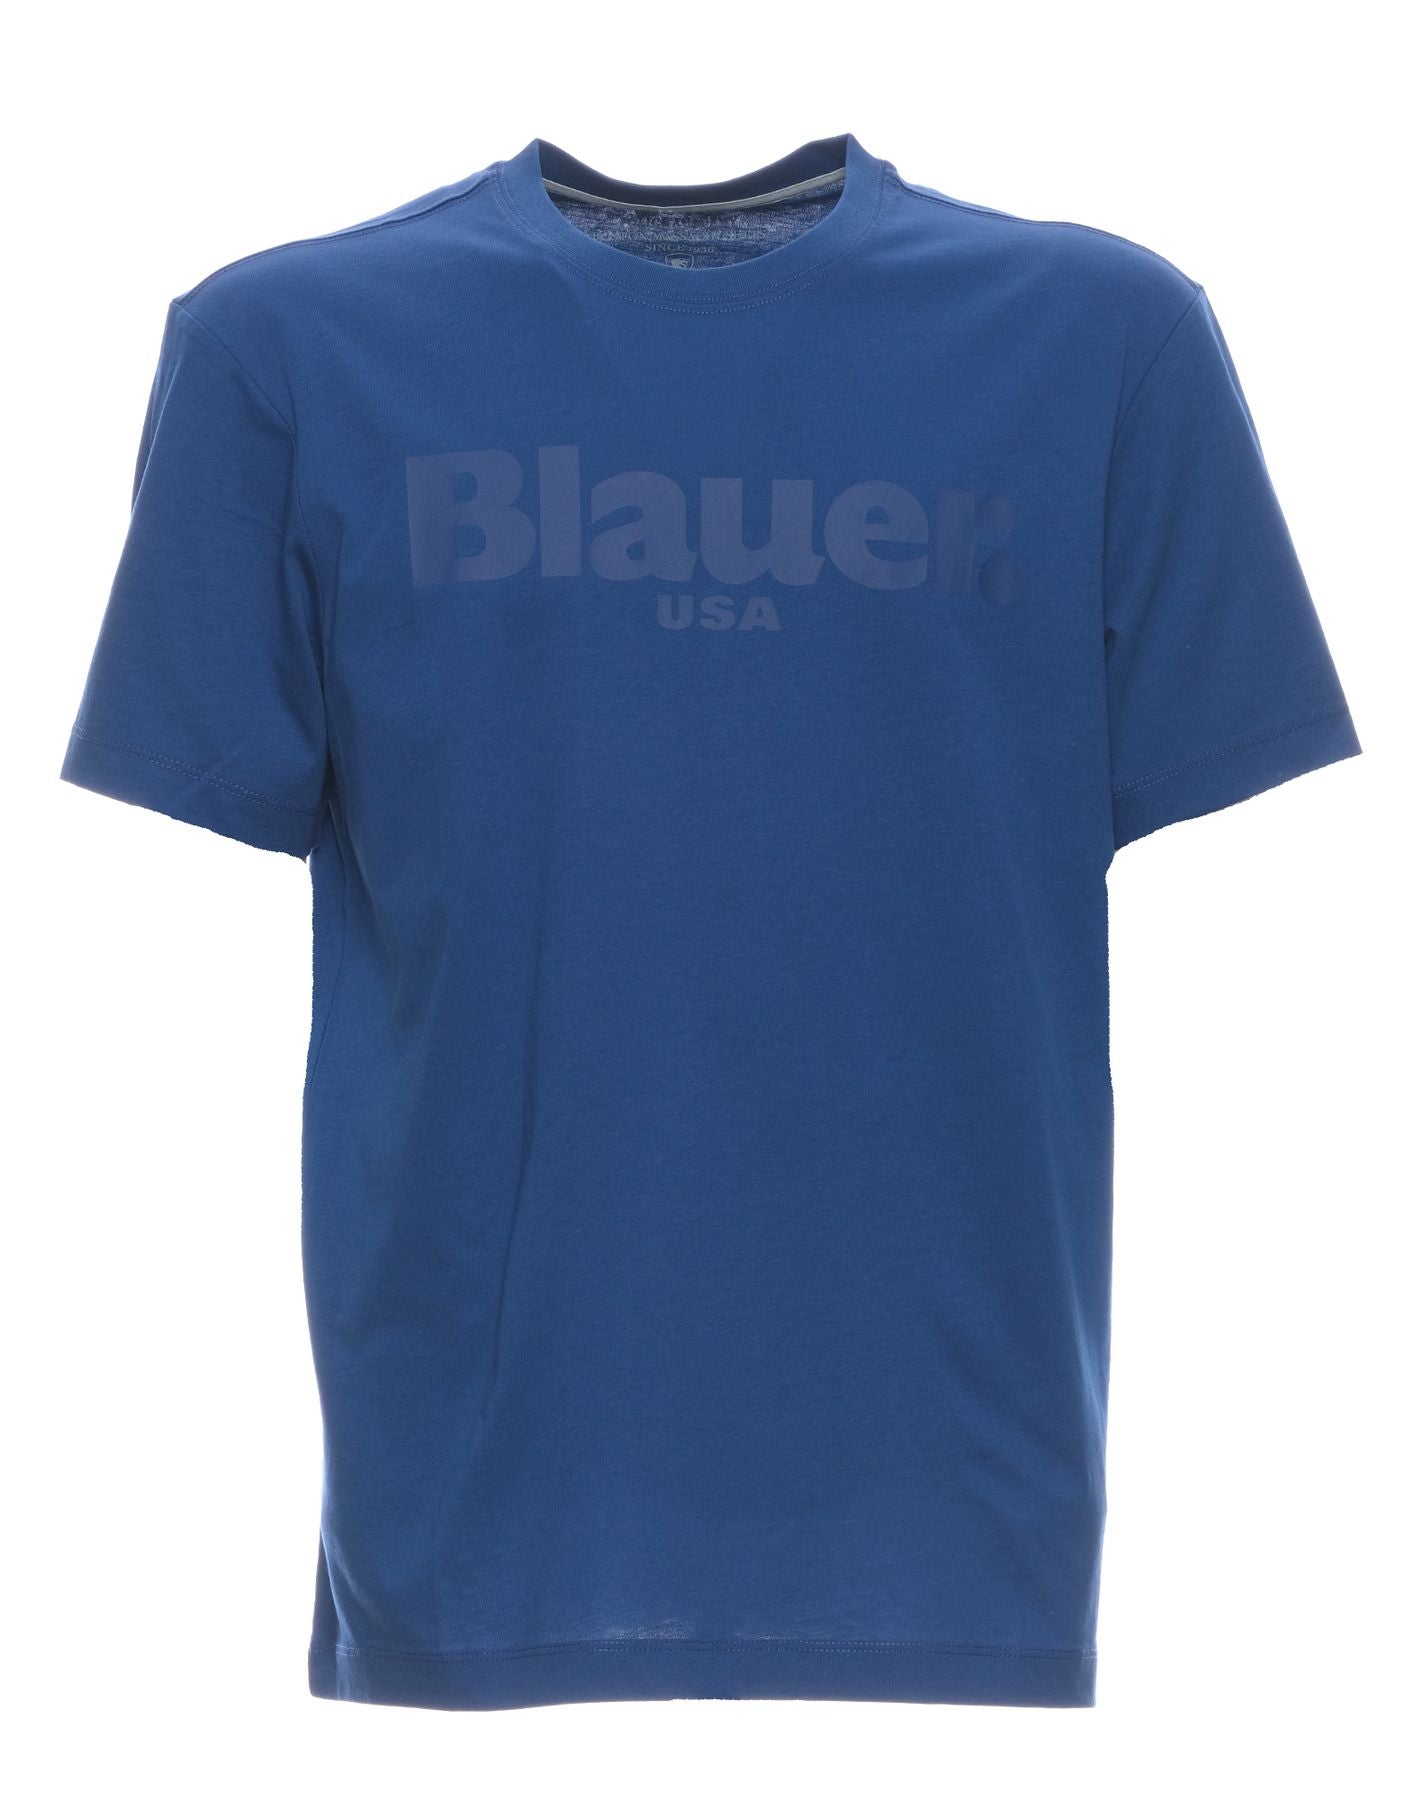 MAN BLUH02094 004547 772 용 티셔츠 Blauer